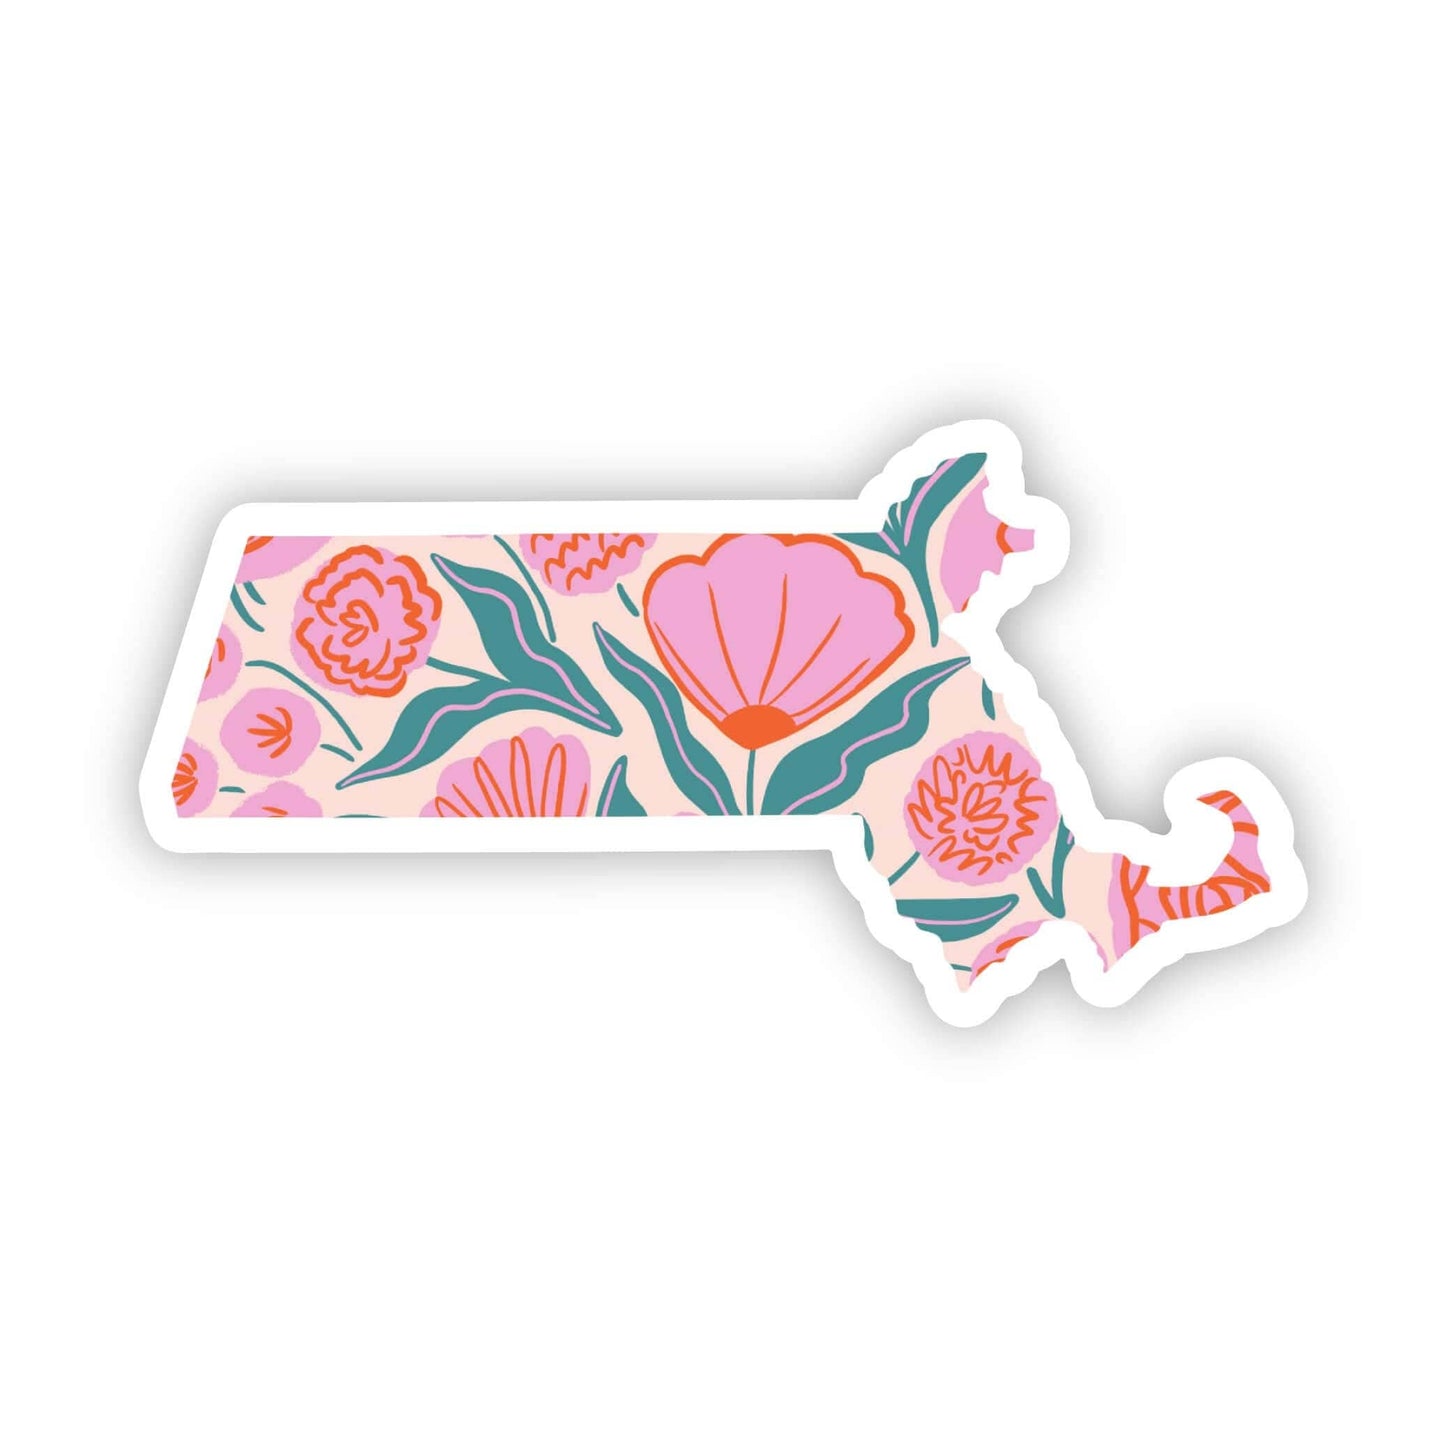 Big Moods - Massachusetts Sticker - Elegant Floral